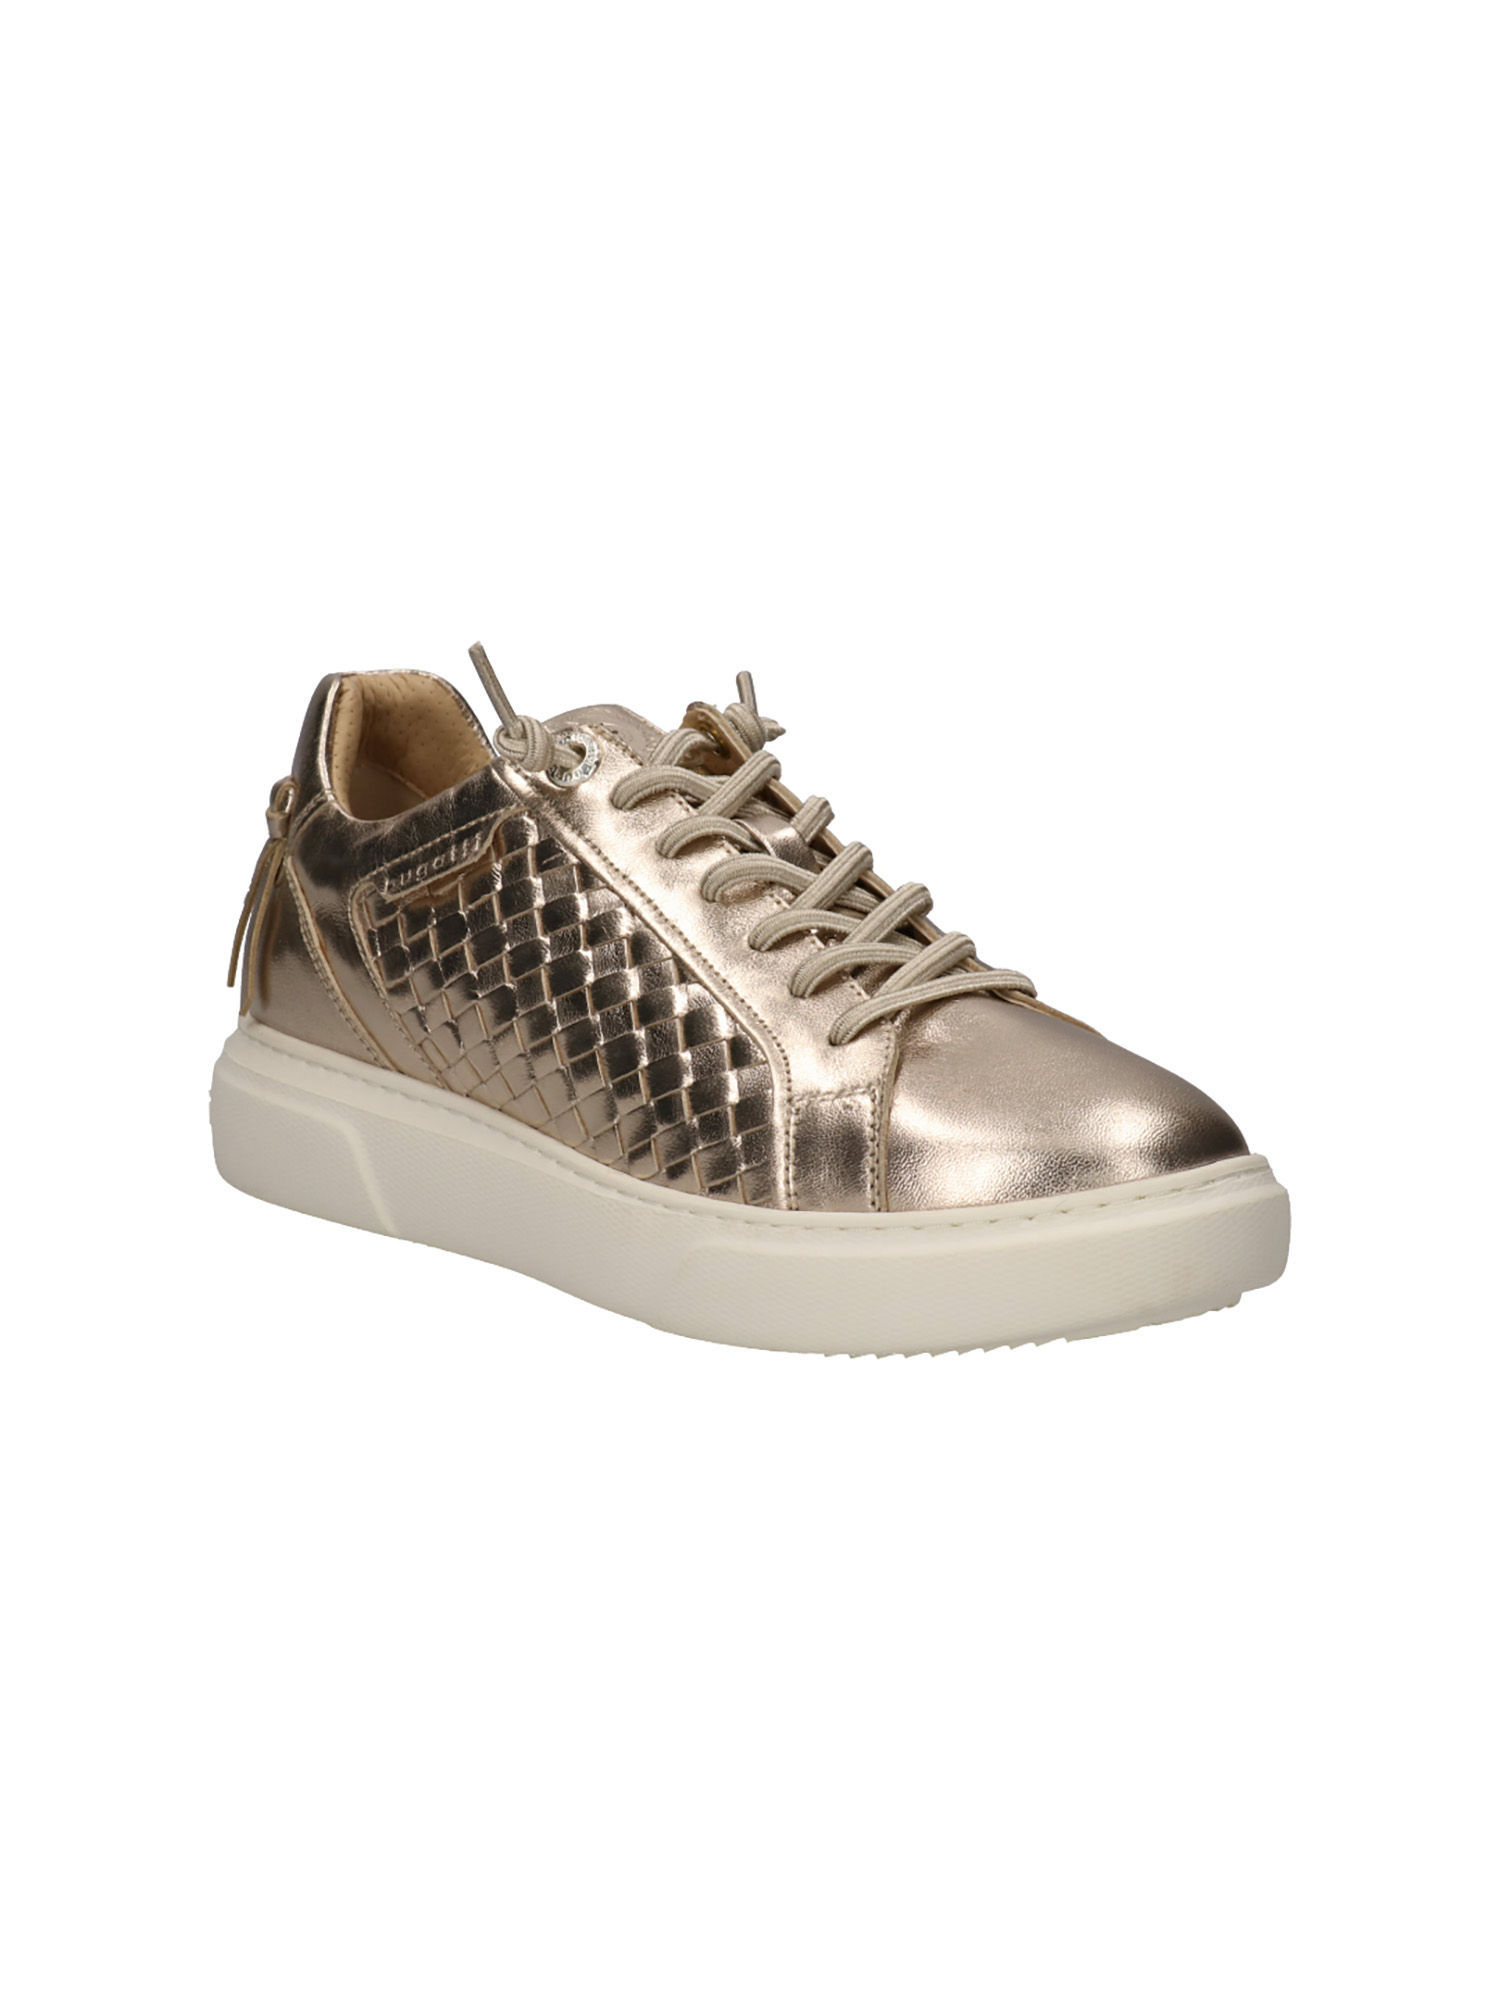 Aldo RONGAN710 Gold Shoes : Amazon.in: Fashion